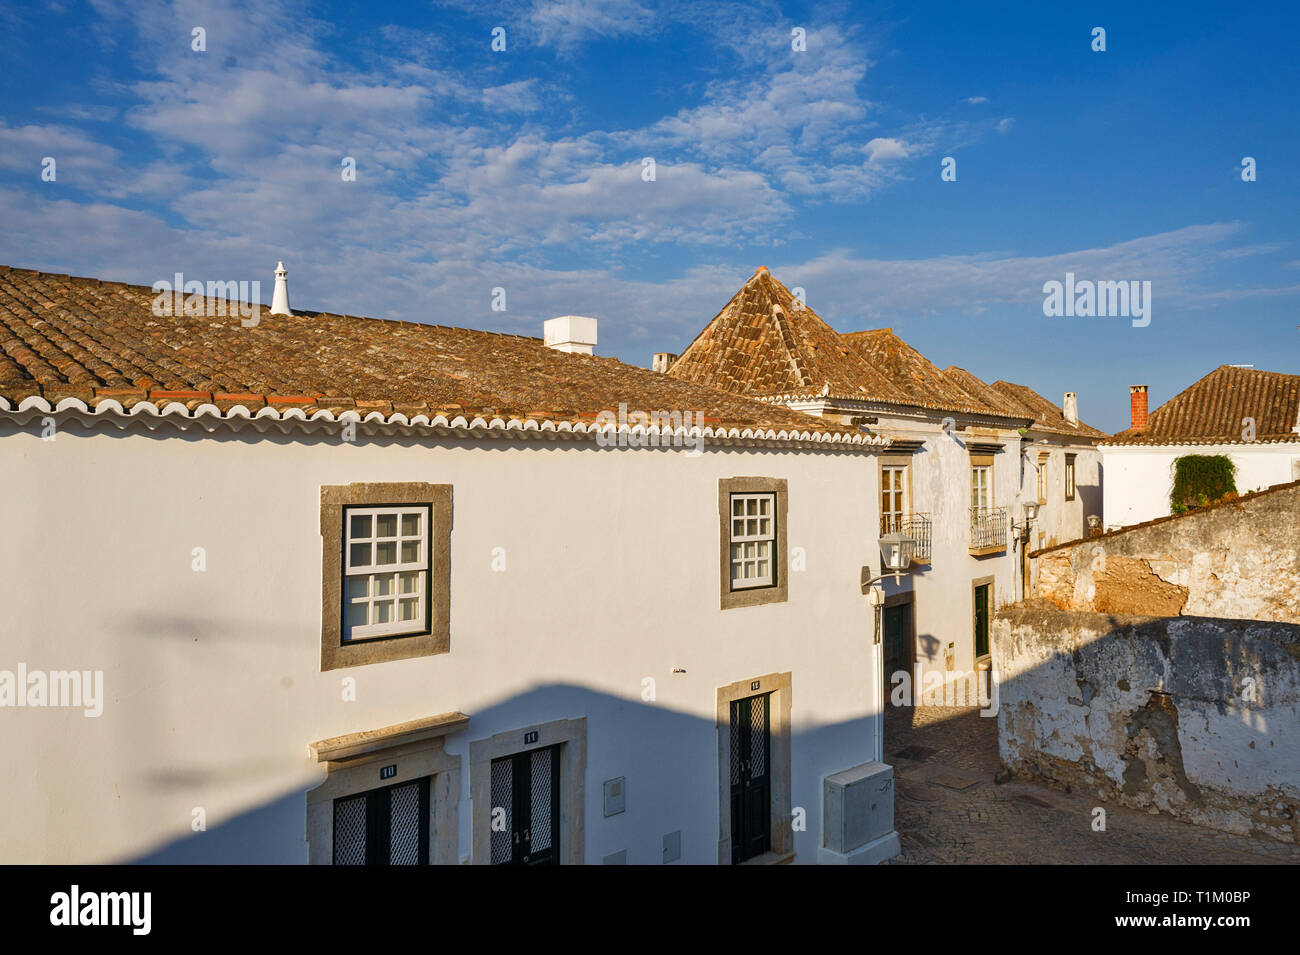 Houses In The Old Town Of Tavira, Algarve Portugal Stock Photo